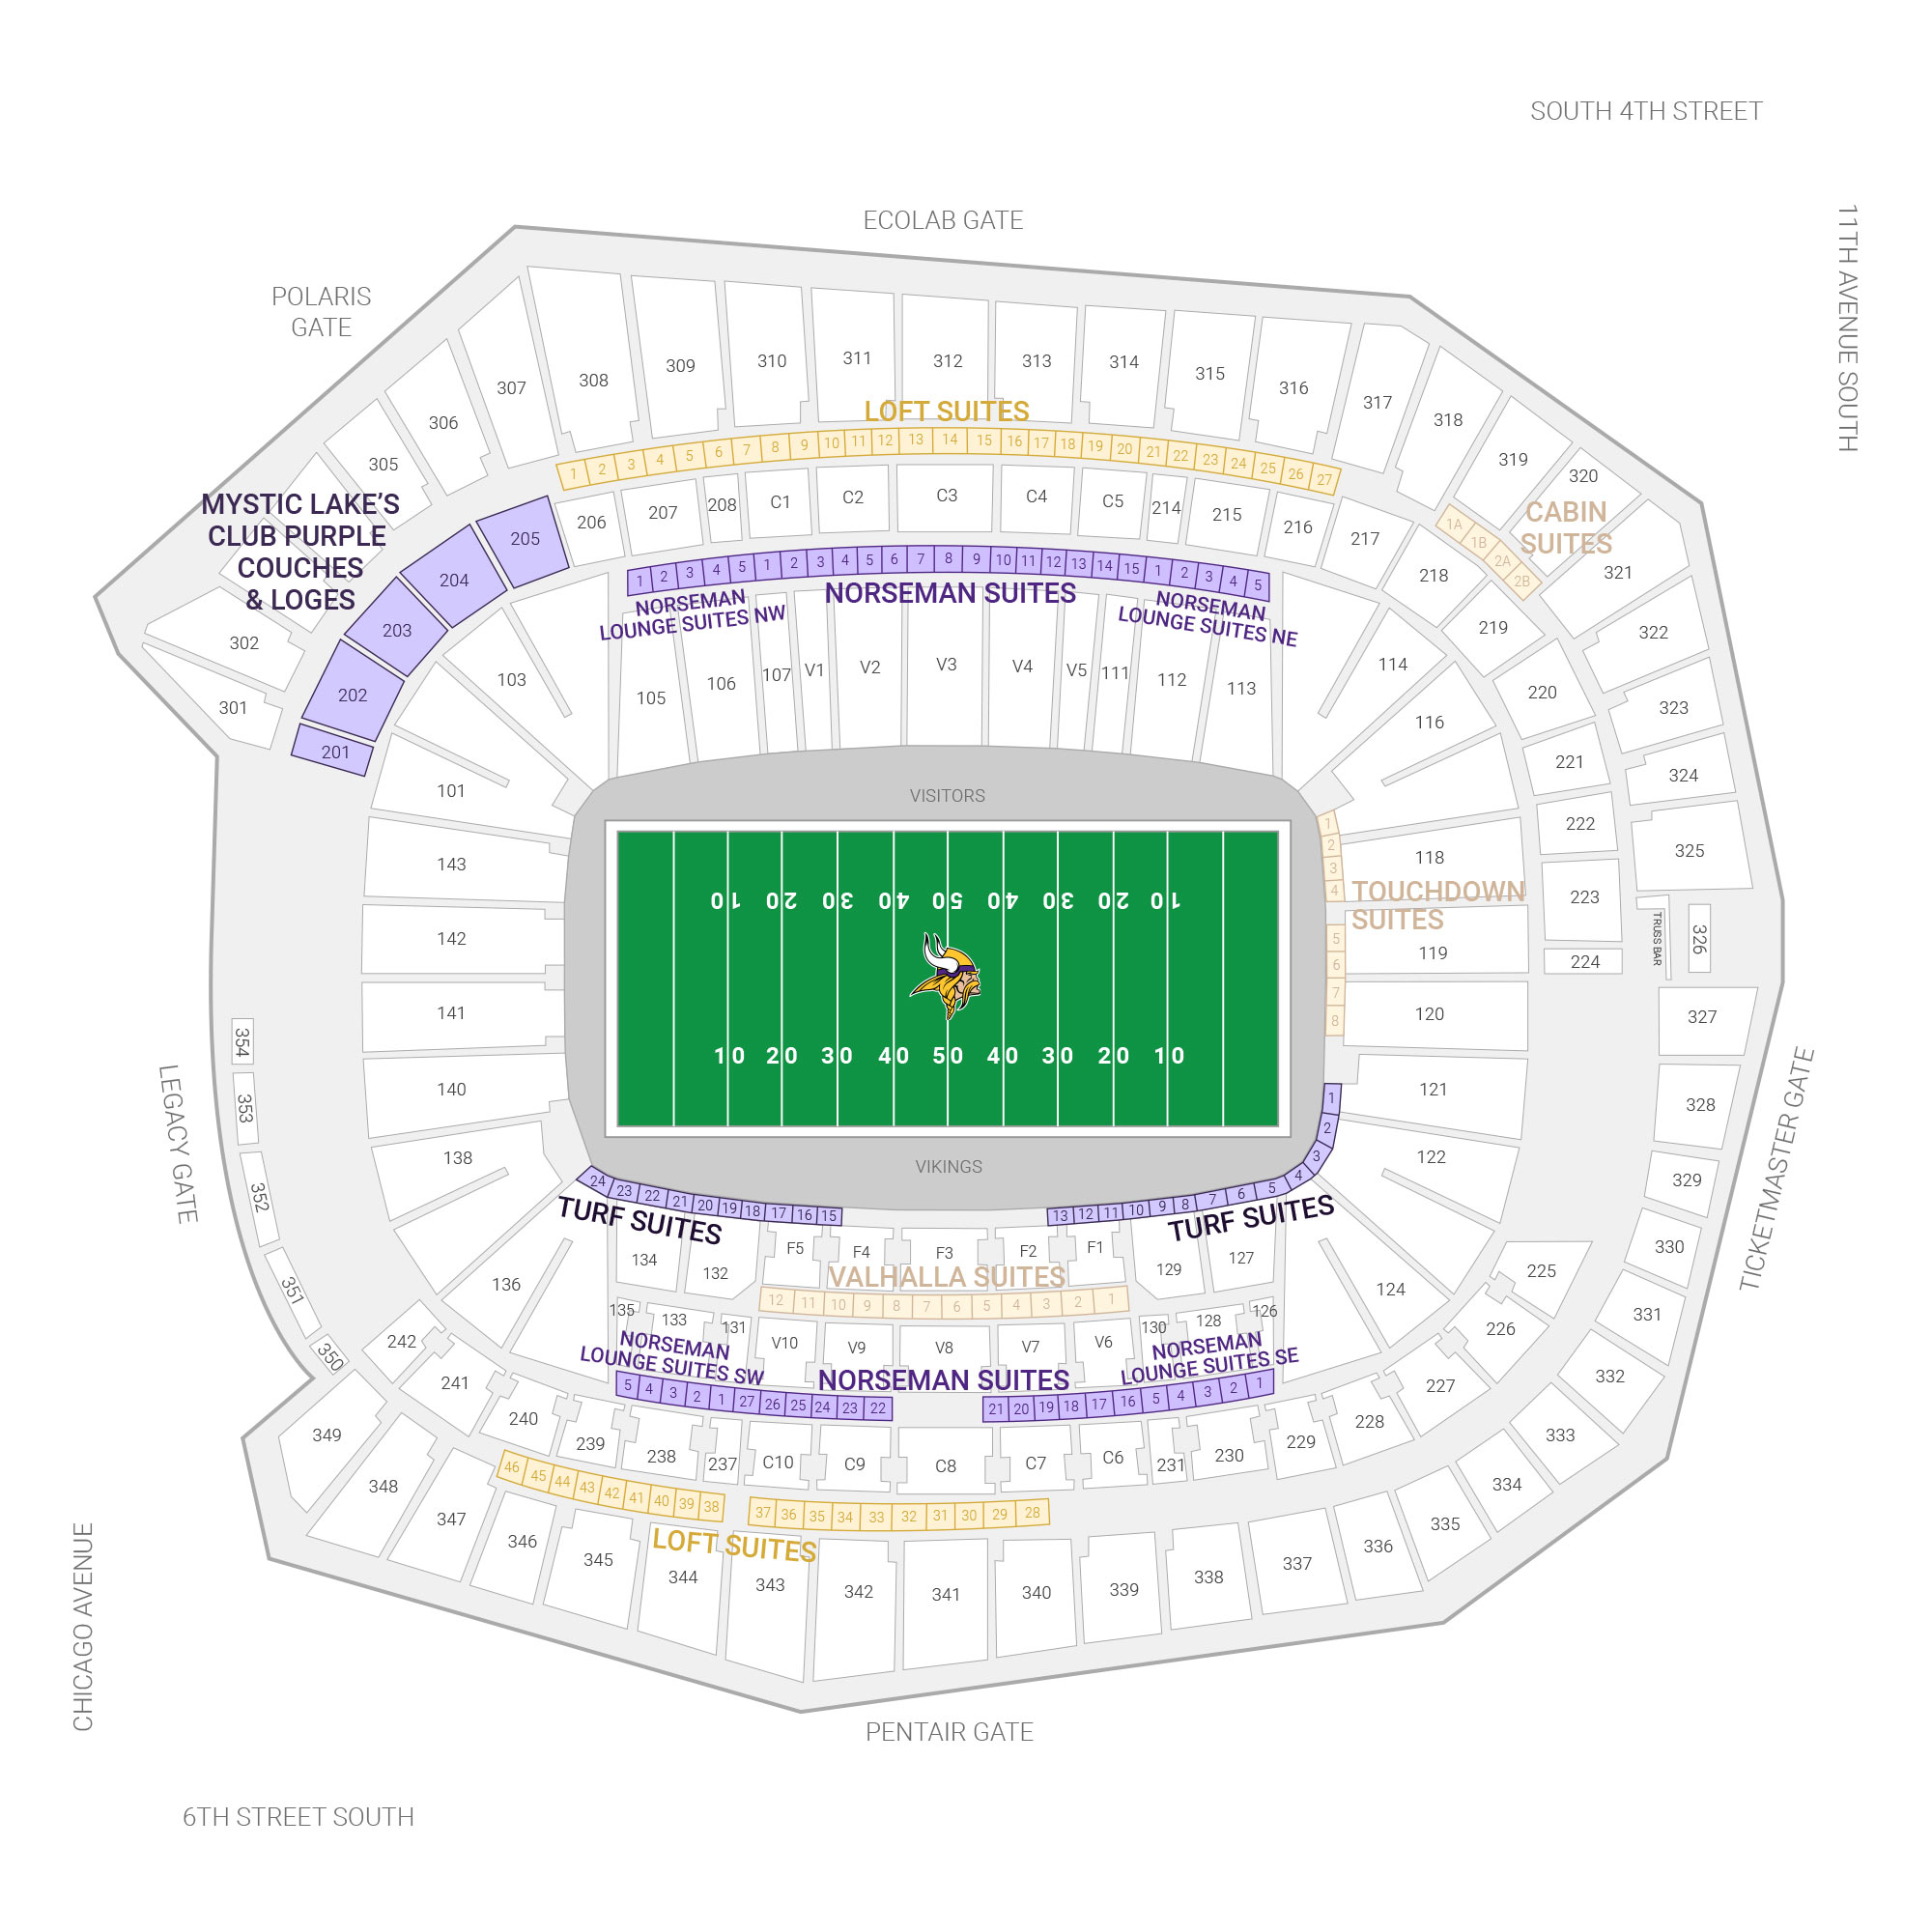 U.S. Bank Stadium / Minnesota Vikings Suite Map and Seating Chart